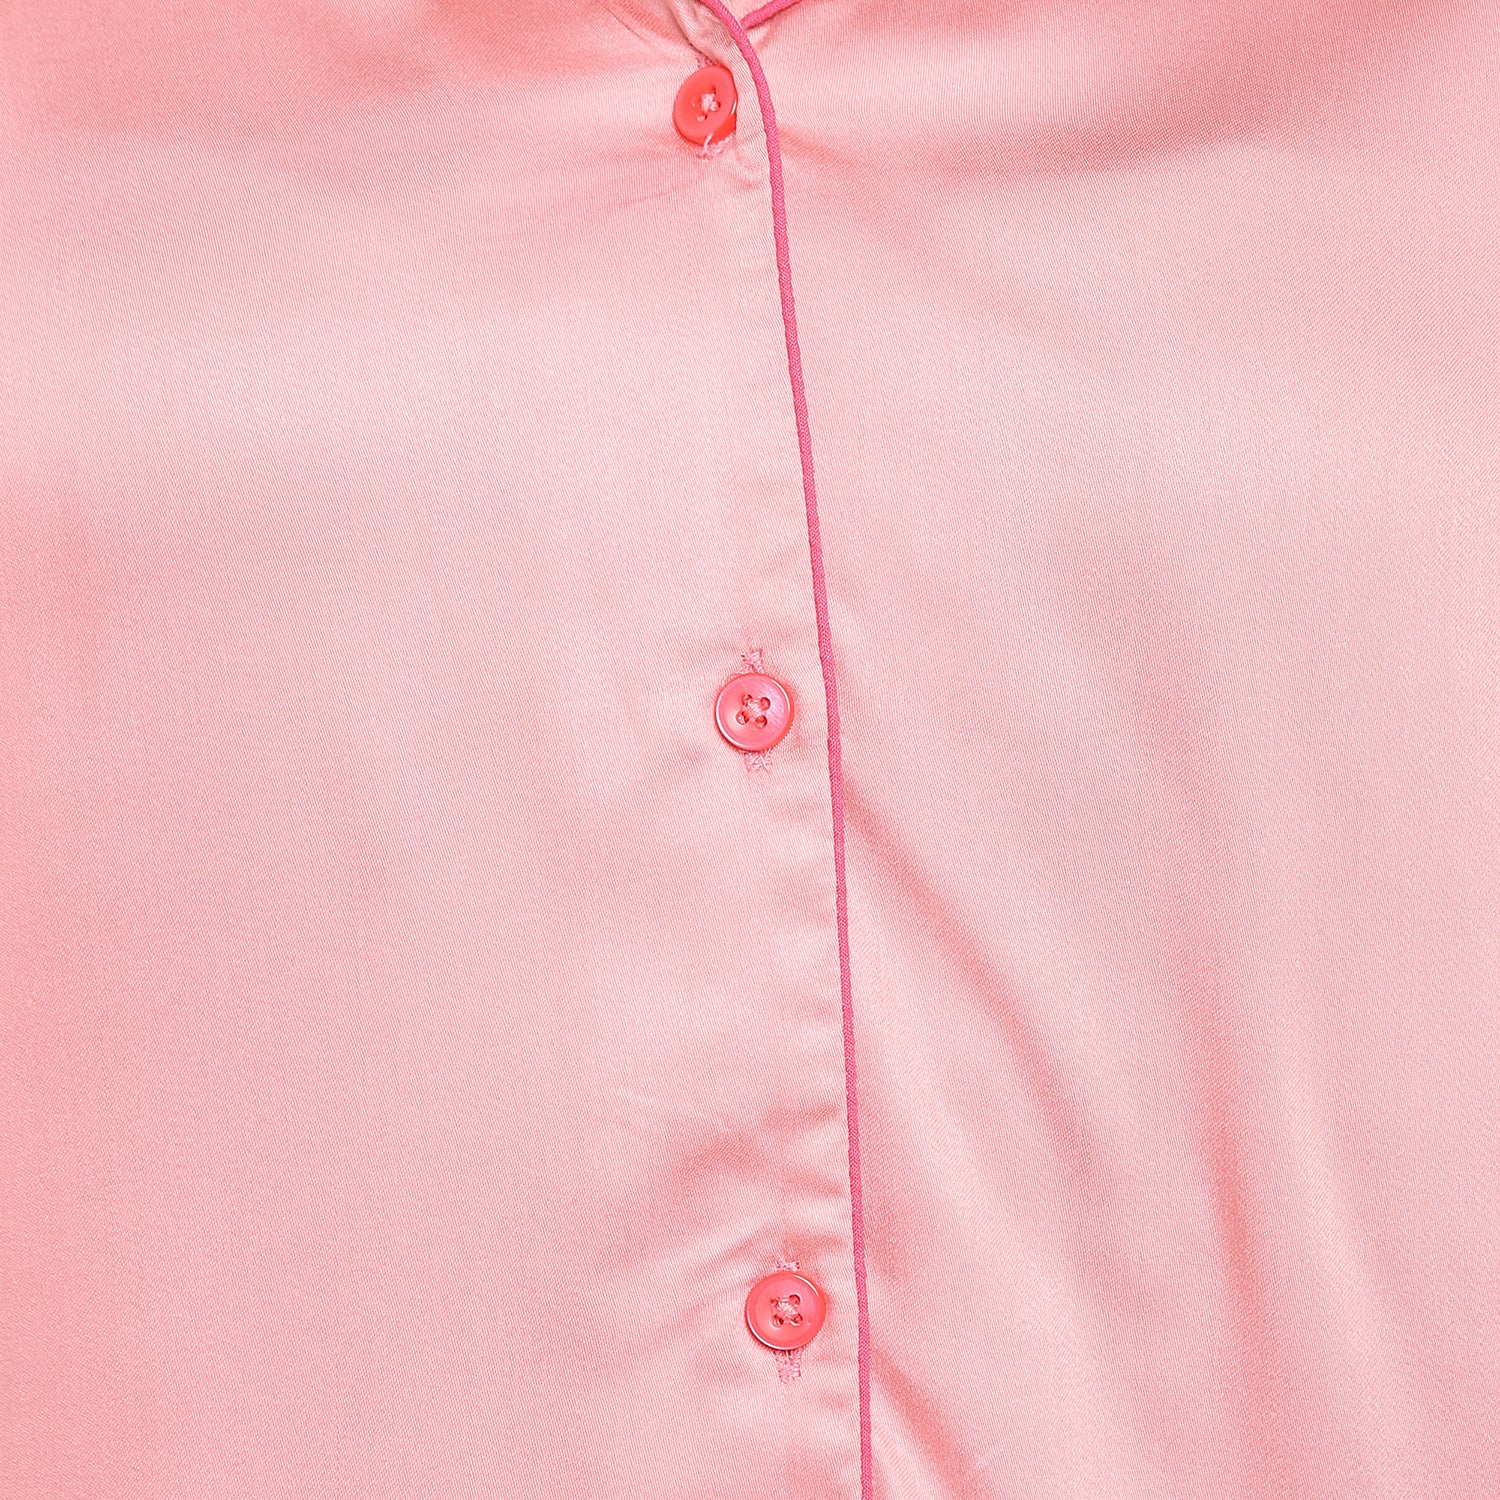 Ultra Soft Modal Satin Pink Long Sleeve Women's Night Suit - Shopbloom